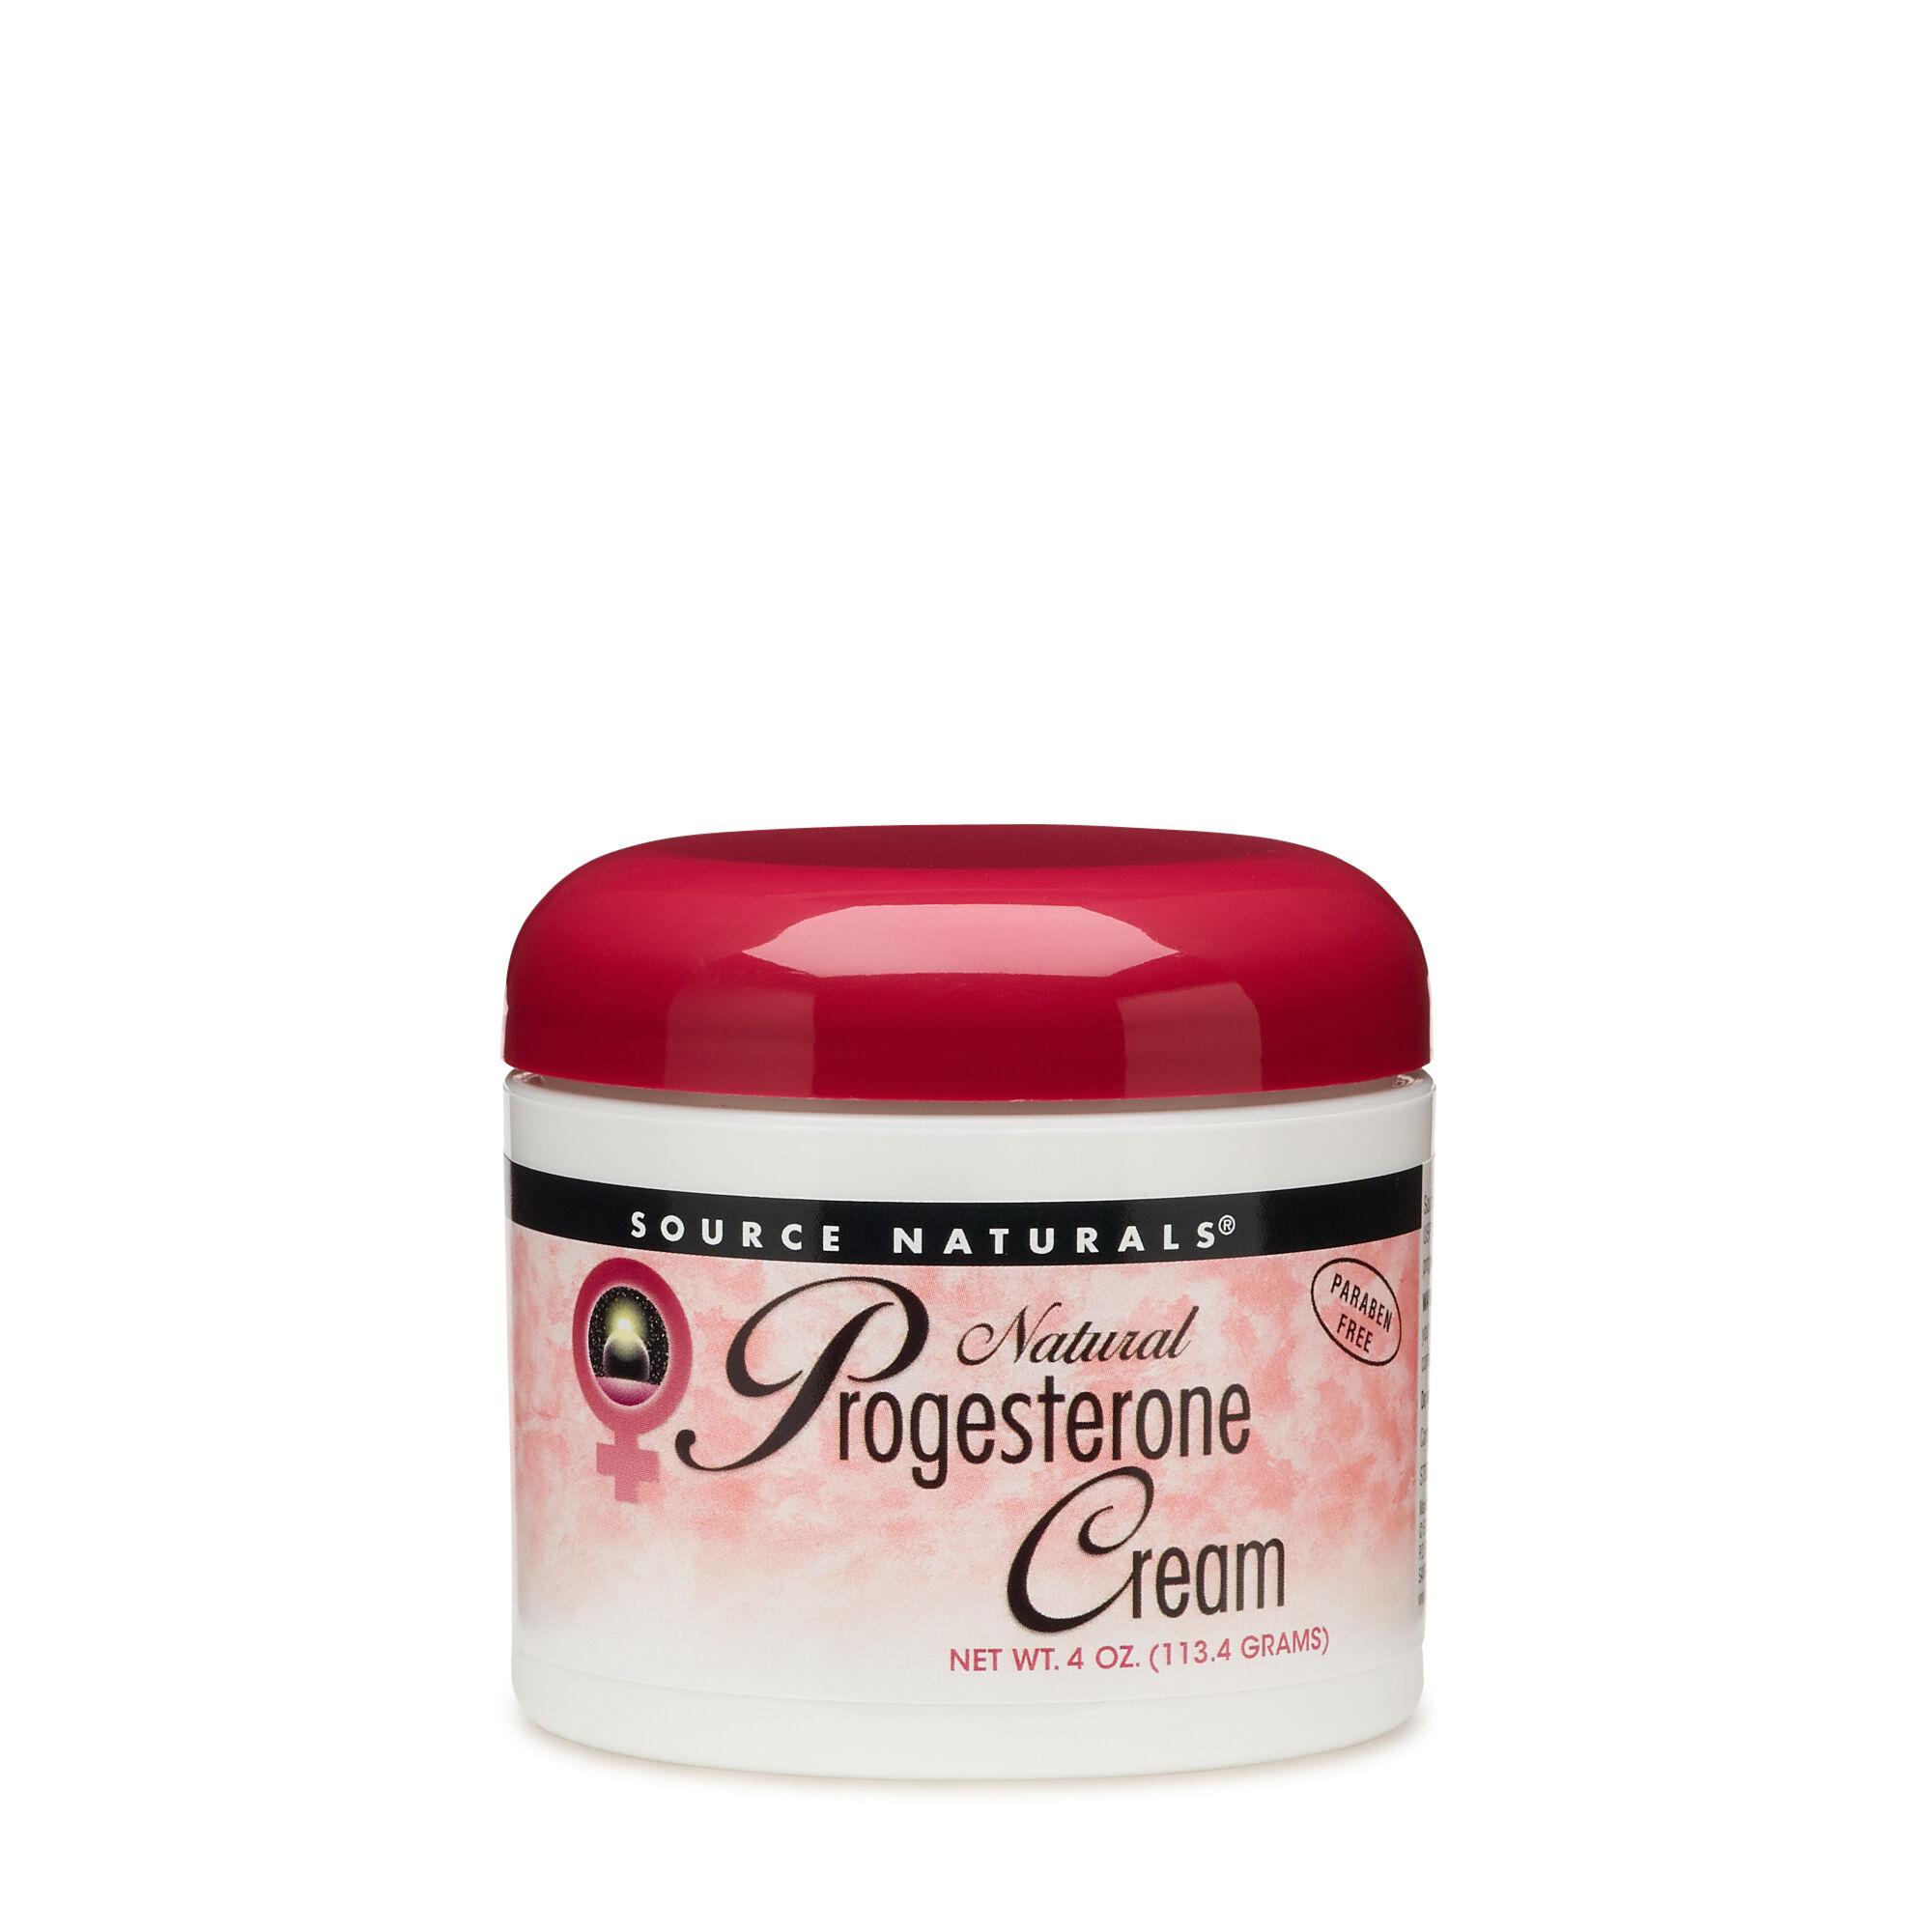 Progesterone cream male hair loss